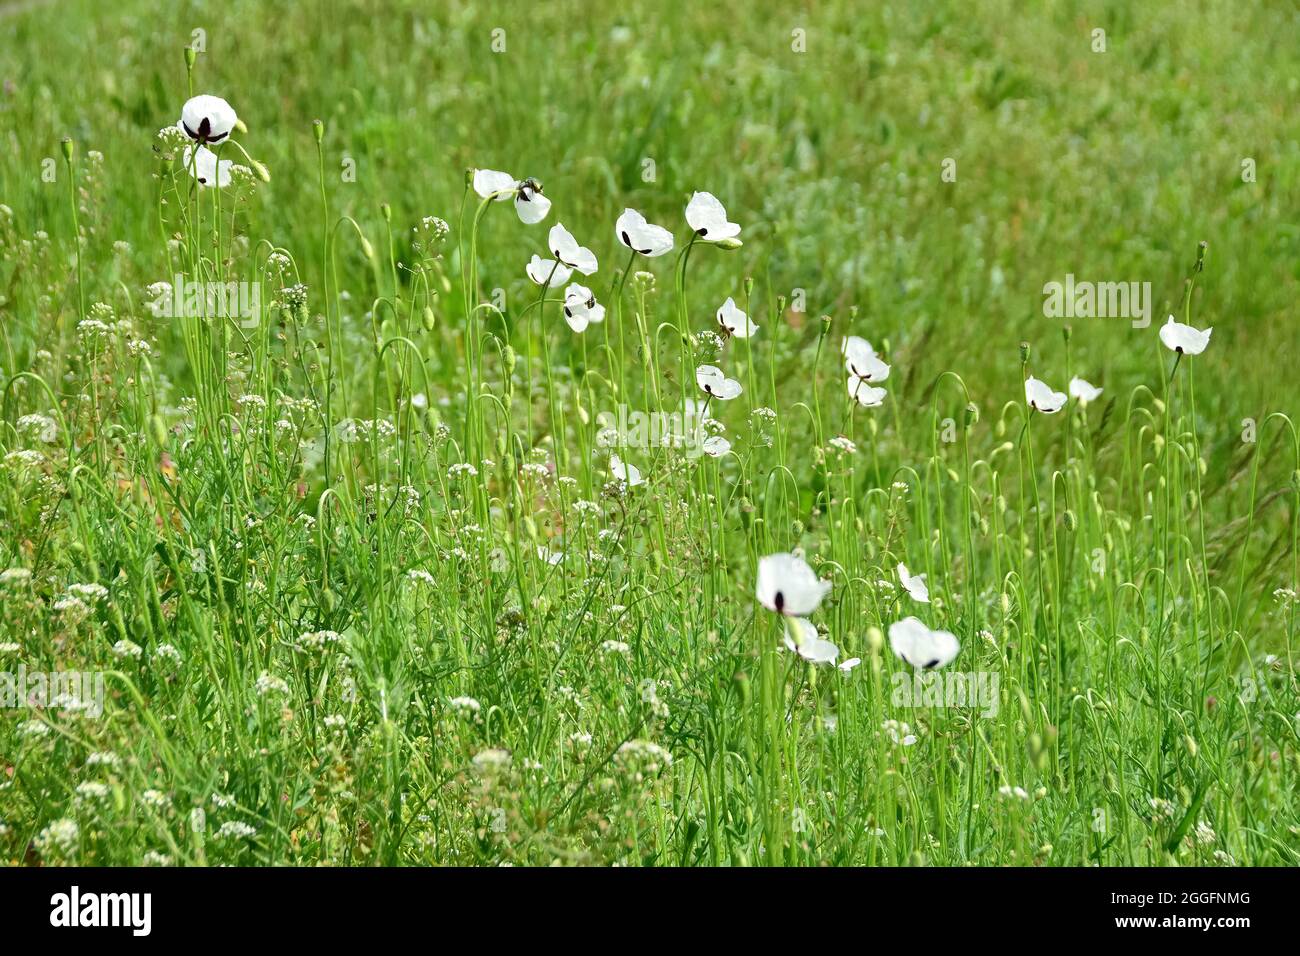 long-headed poppy, Saat-Mohn, Papaver dubium albiflorum, bujdosó mák, Hungary, Magyarország, Europe Stock Photo